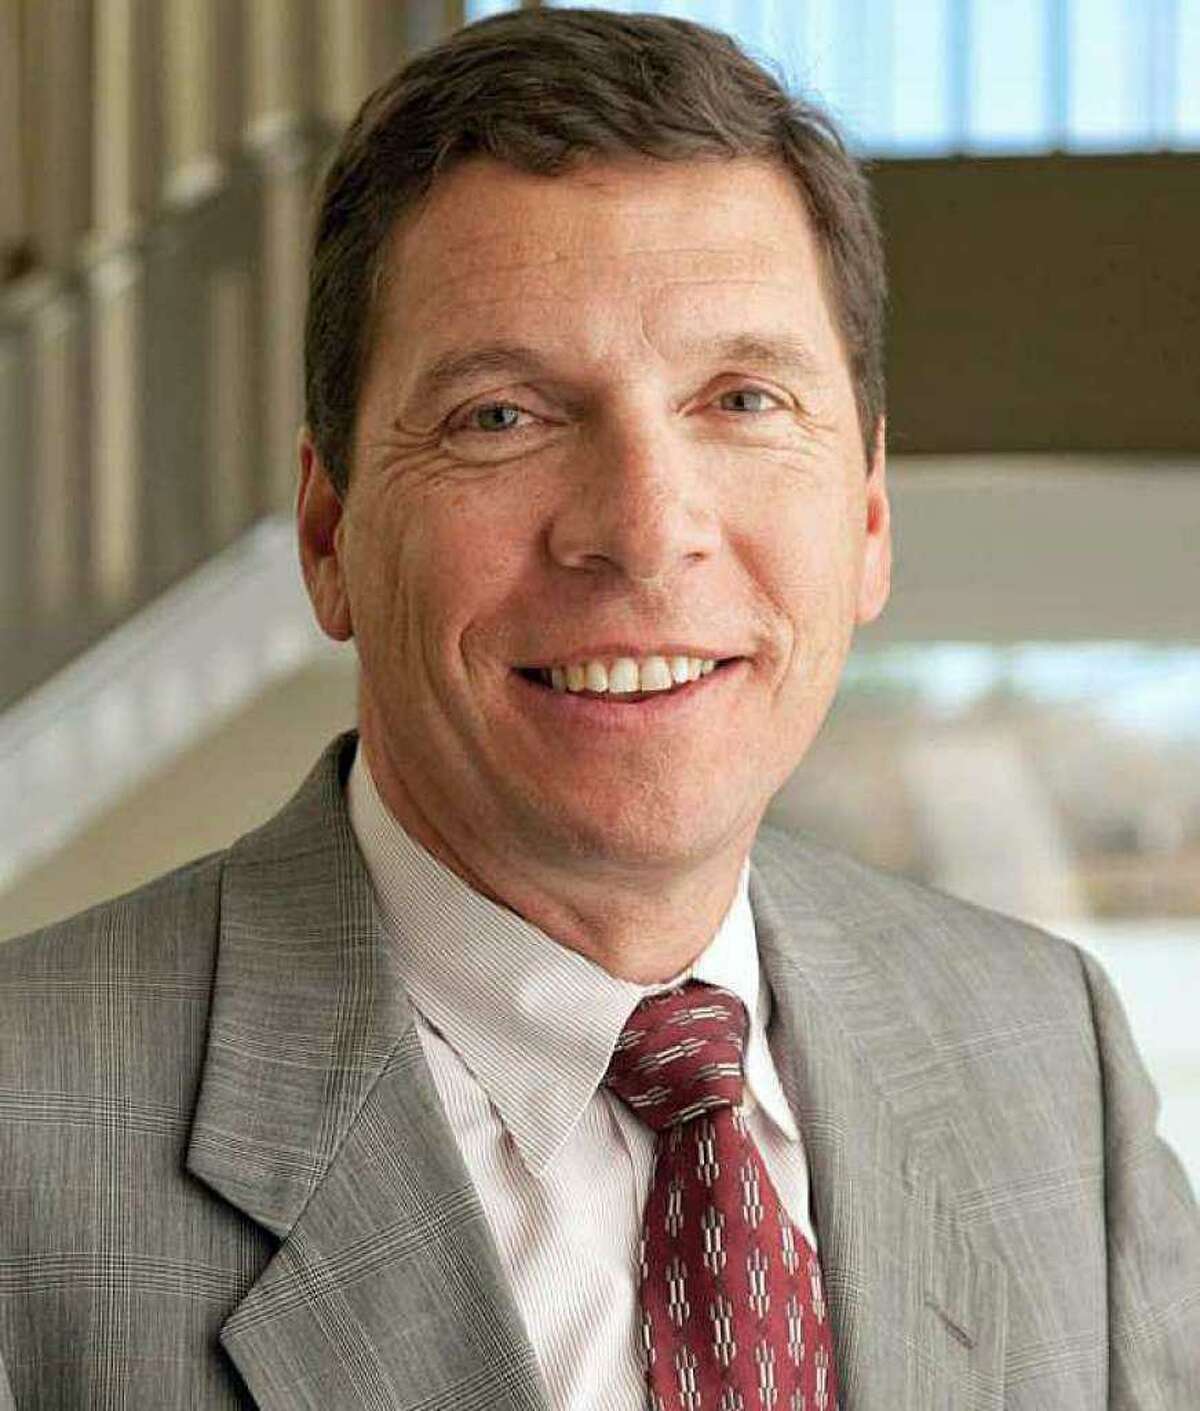 Dr. John Murphy, CEO of Nuvance Health